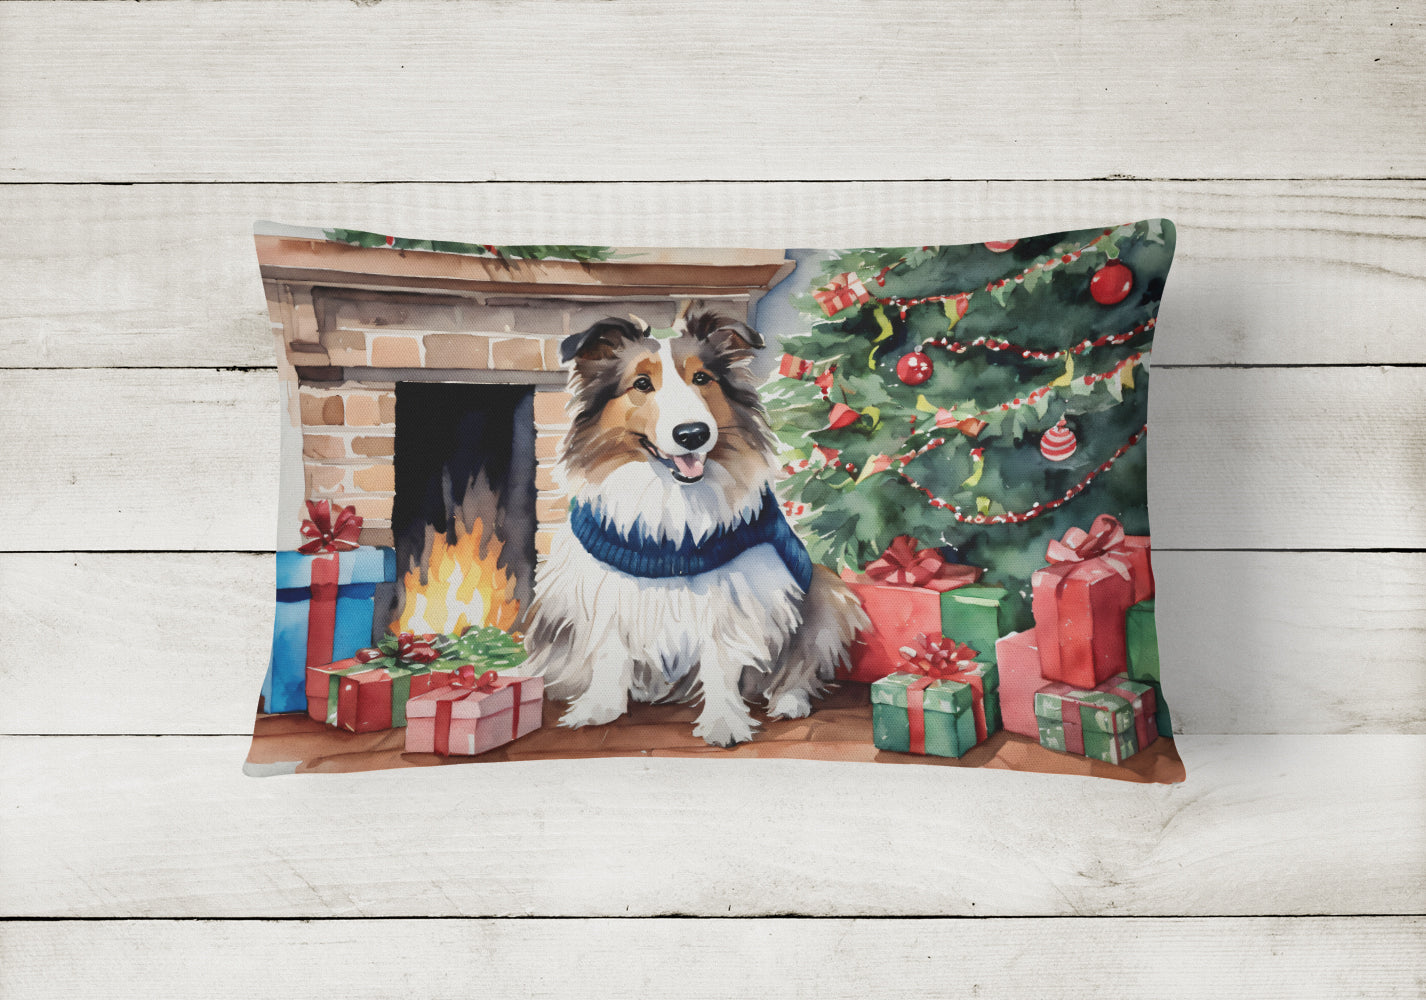 Buy this Sheltie Cozy Christmas Throw Pillow